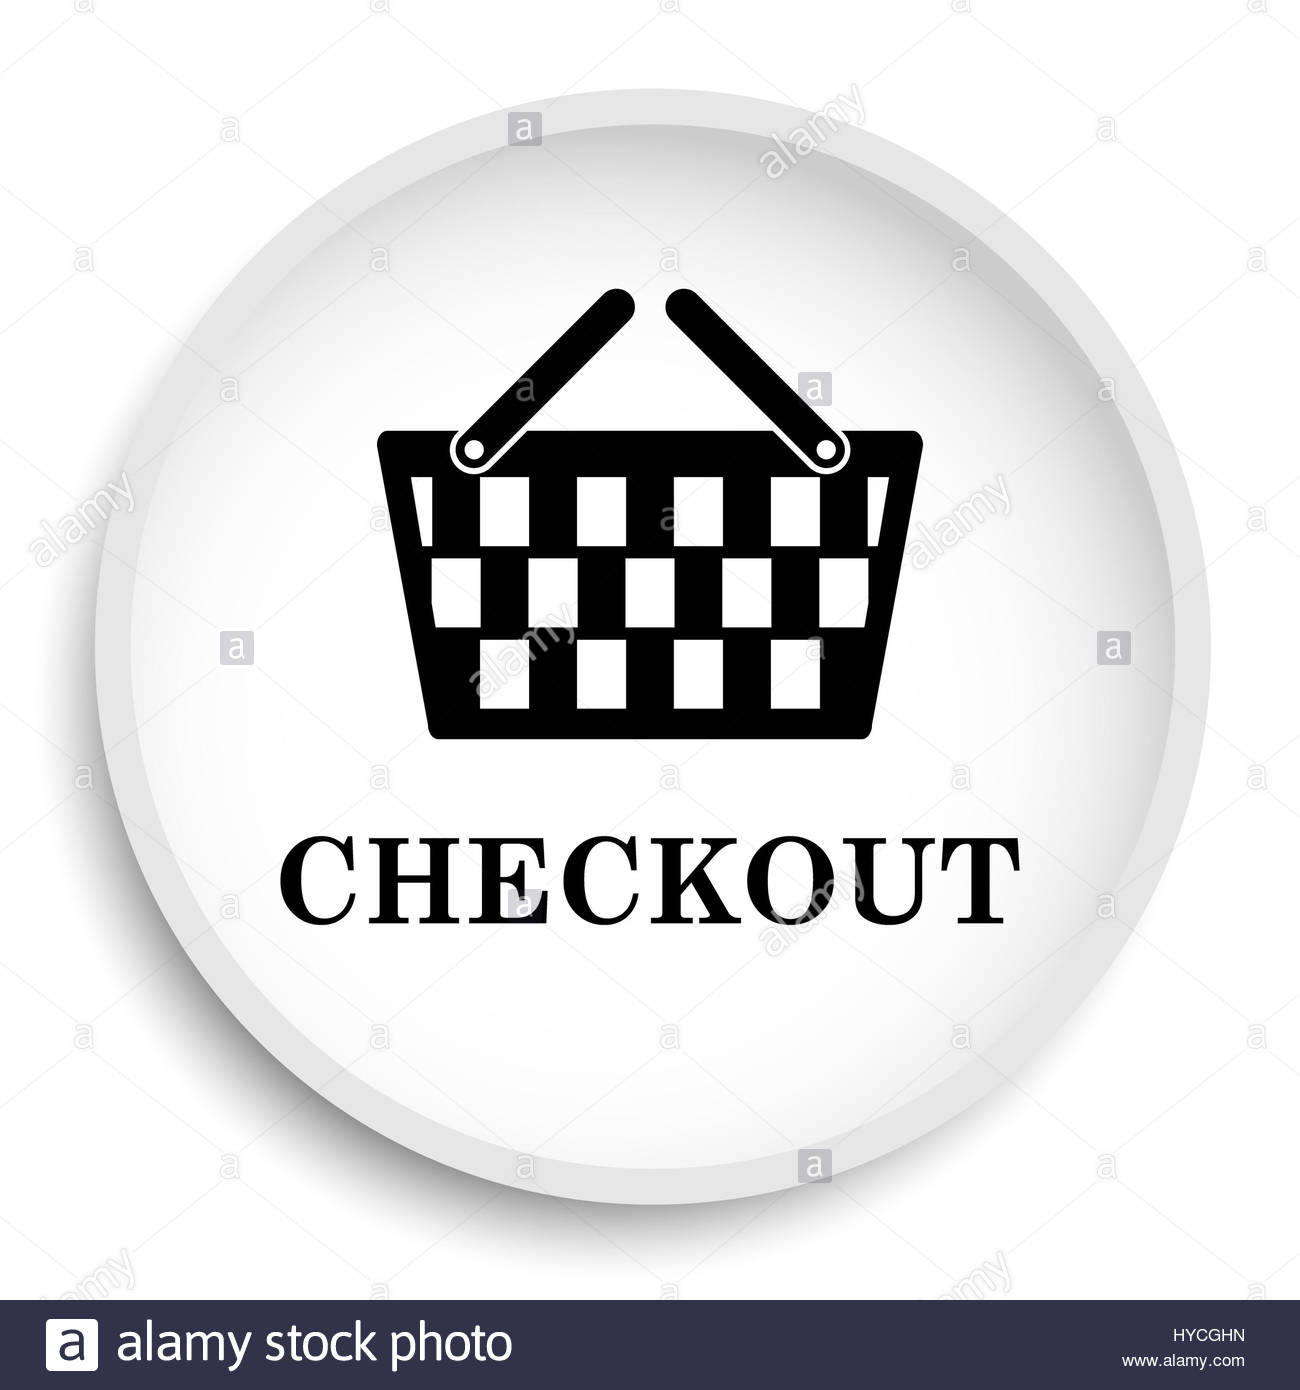 Checkout icons | Noun Project